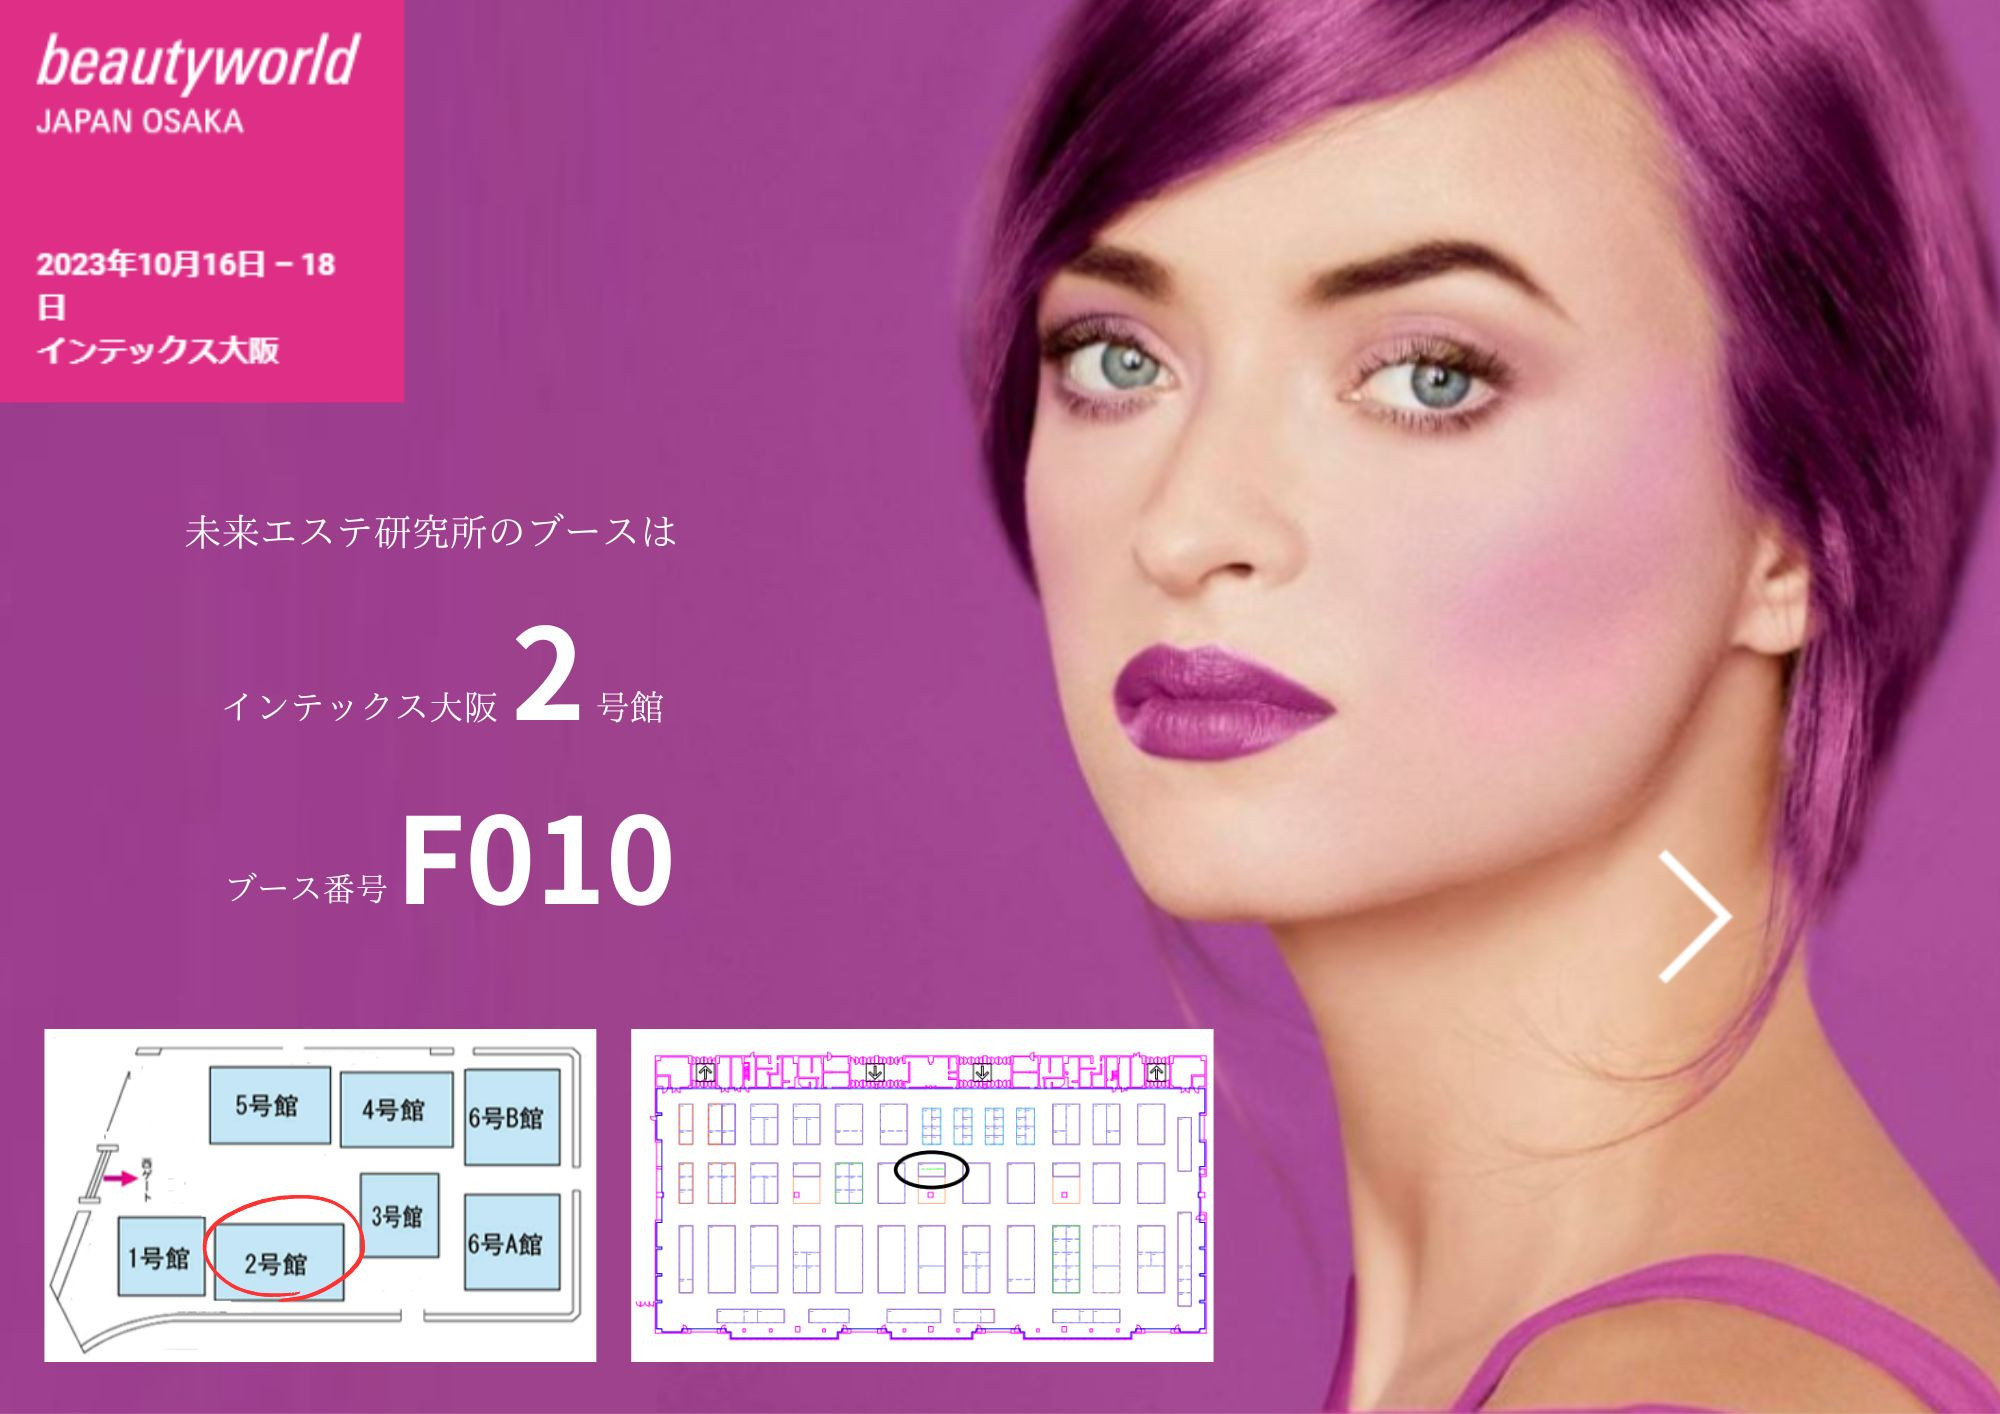 beauty world JAPAN 2023大阪に出展します